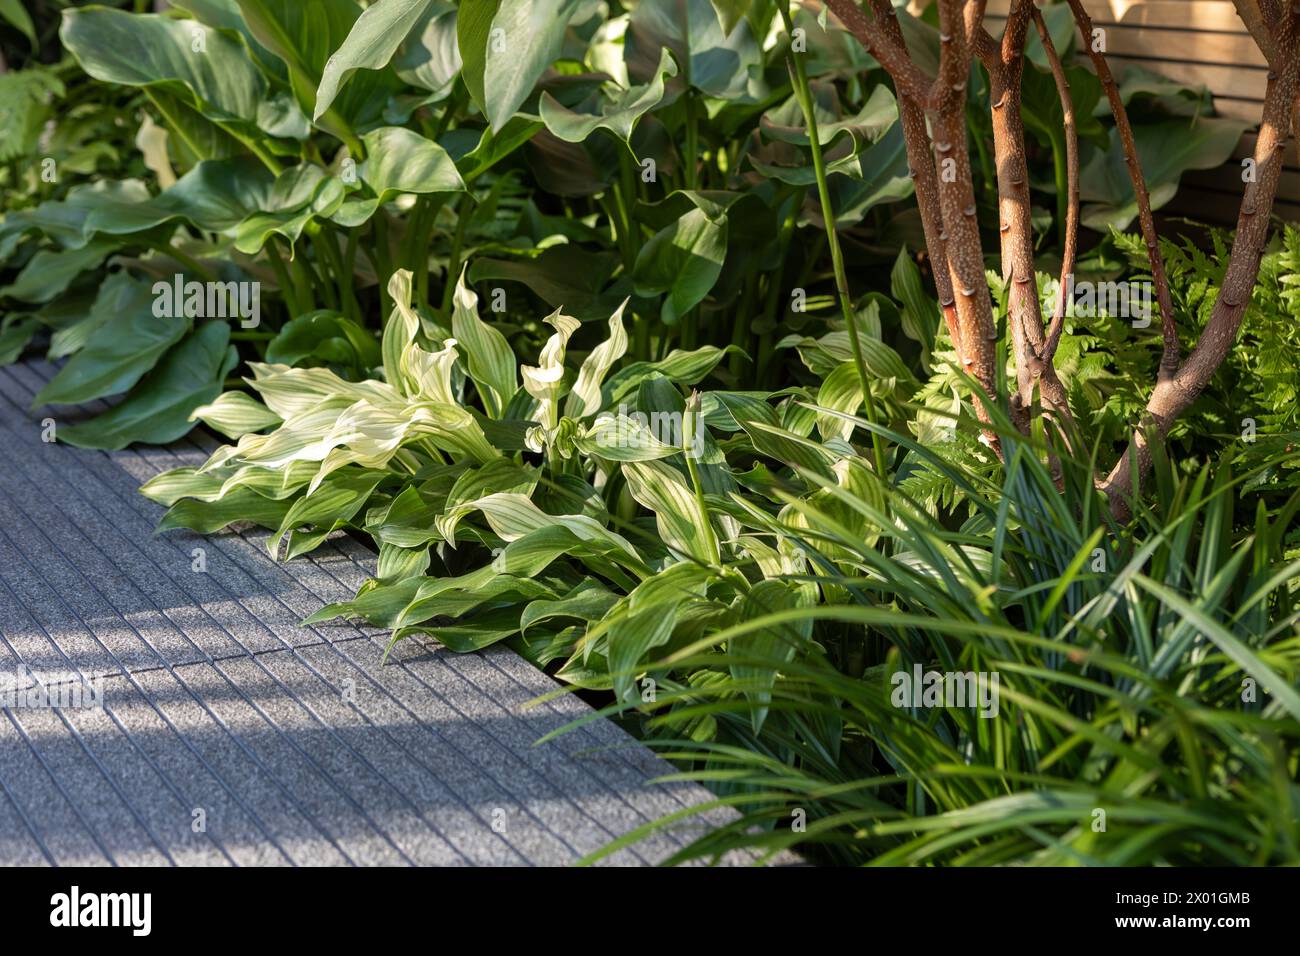 English tropical planting scheme. Hosta 'White Feather', Zantedeschia, Carex, foliage plants / planting, leafy planting combination edging a path Stock Photo